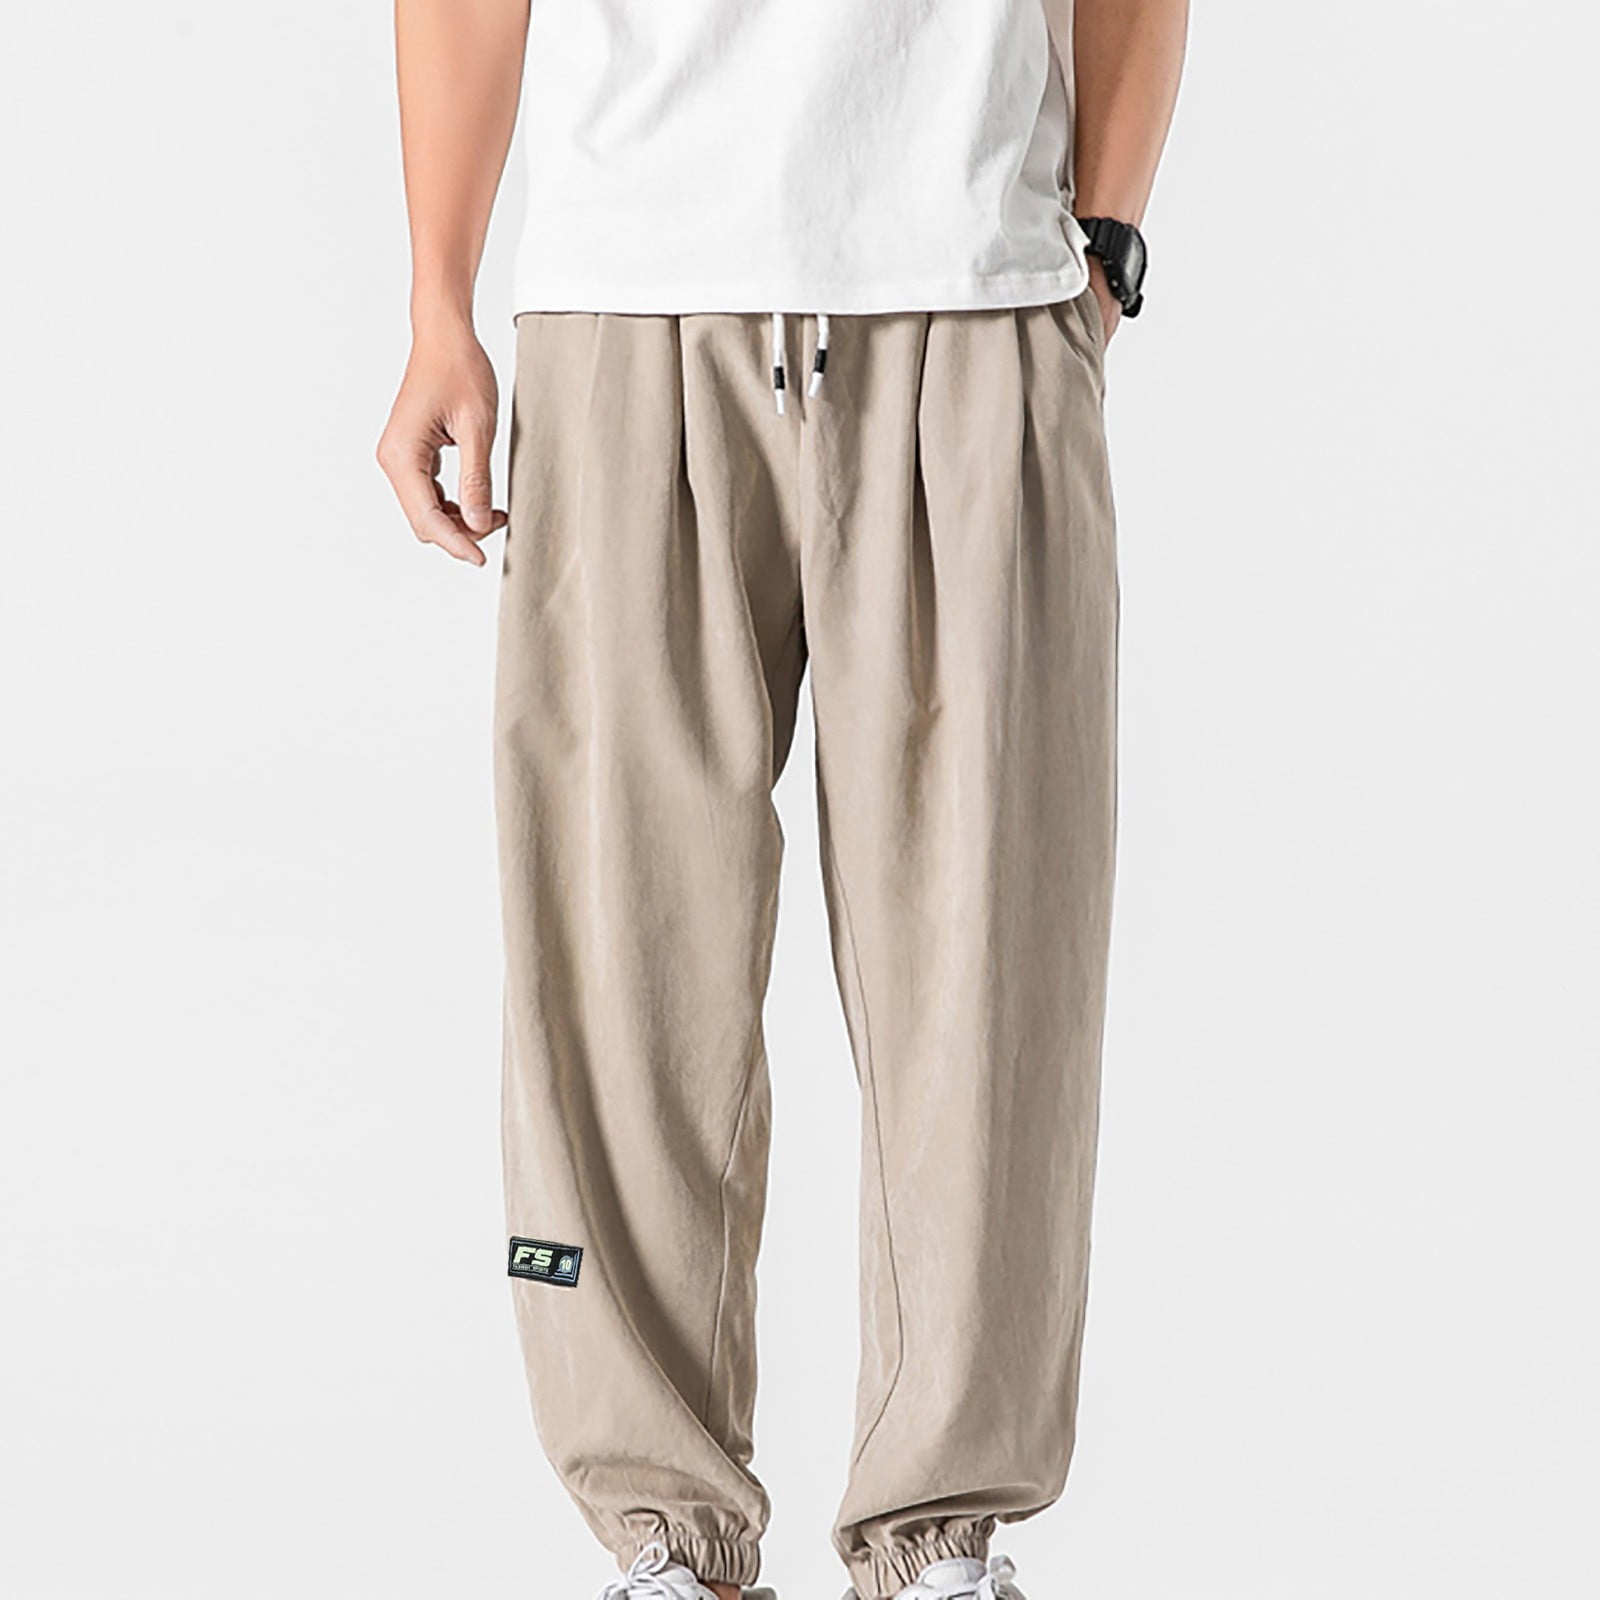 Relaxed Fit Corduroy Pants - Light beige - Men | H&M US